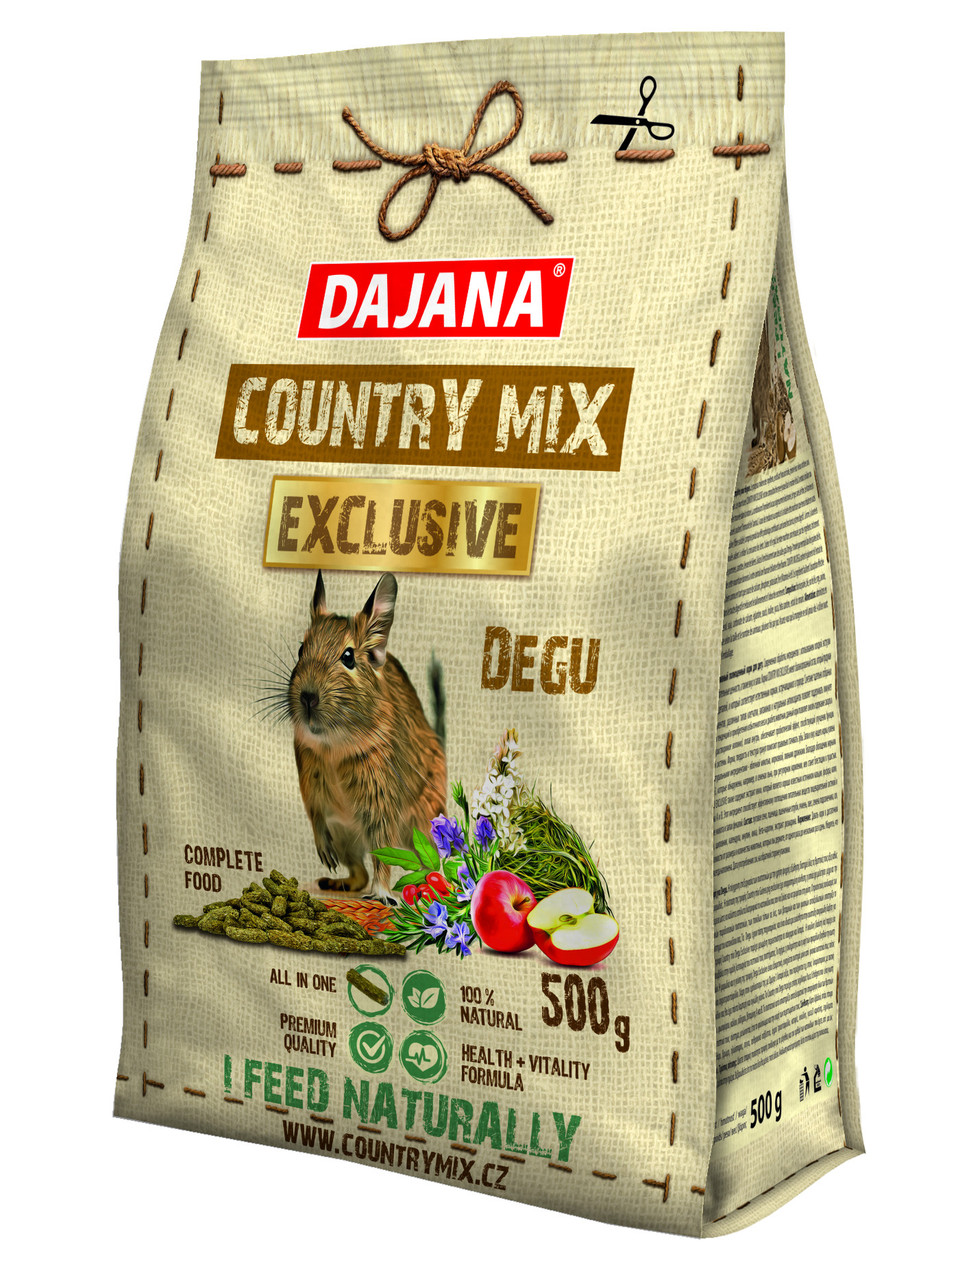 Корм Dajana Country mix Exclusive для дегу, 500 г (DP413J) - фото 1